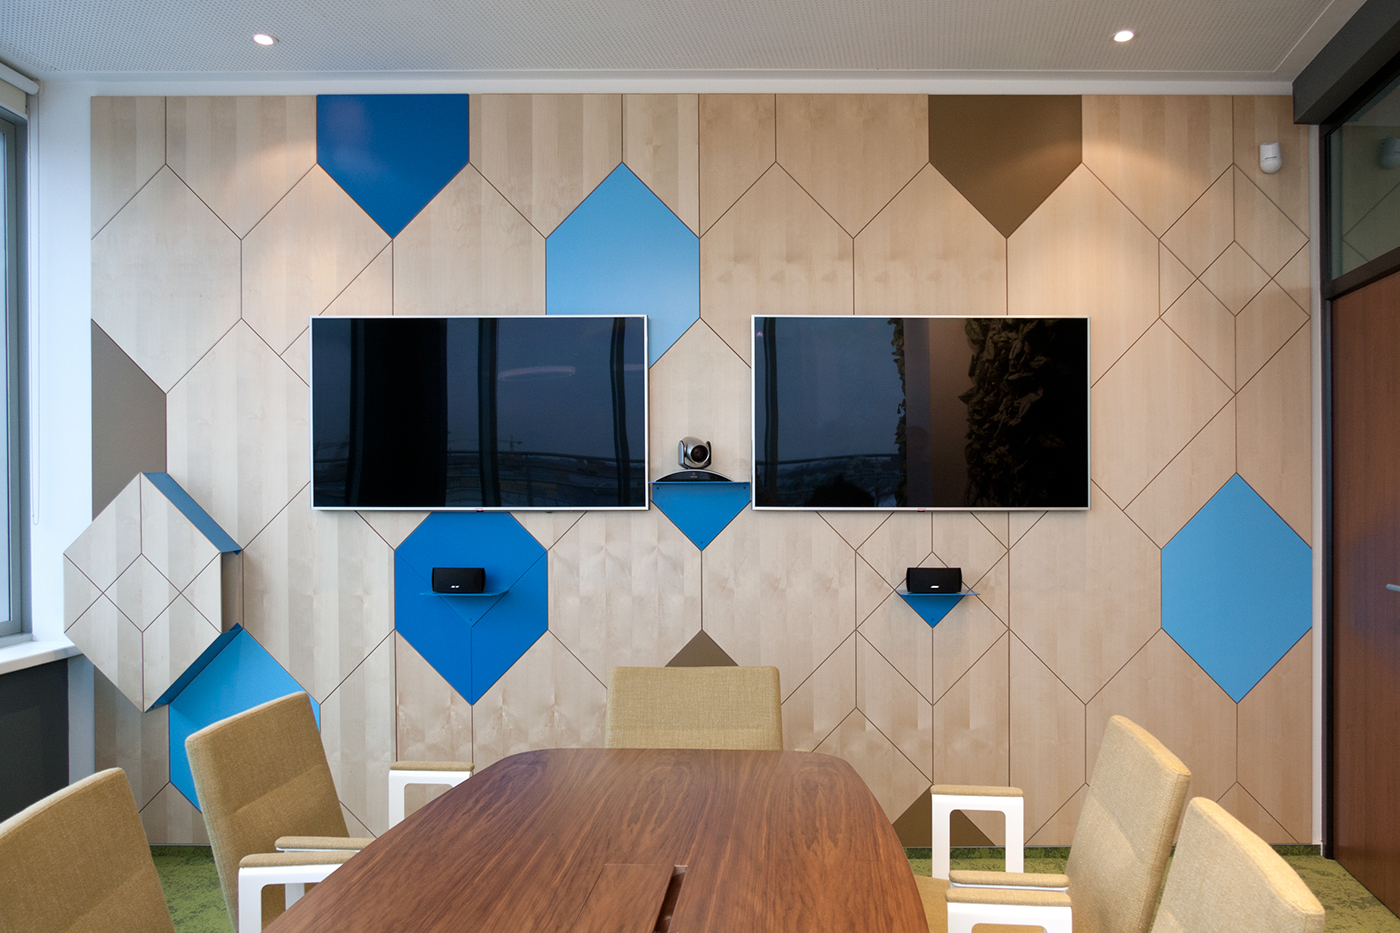 panels Interior wall functional prokk multifunctional wooden panels wooden wood constructivism